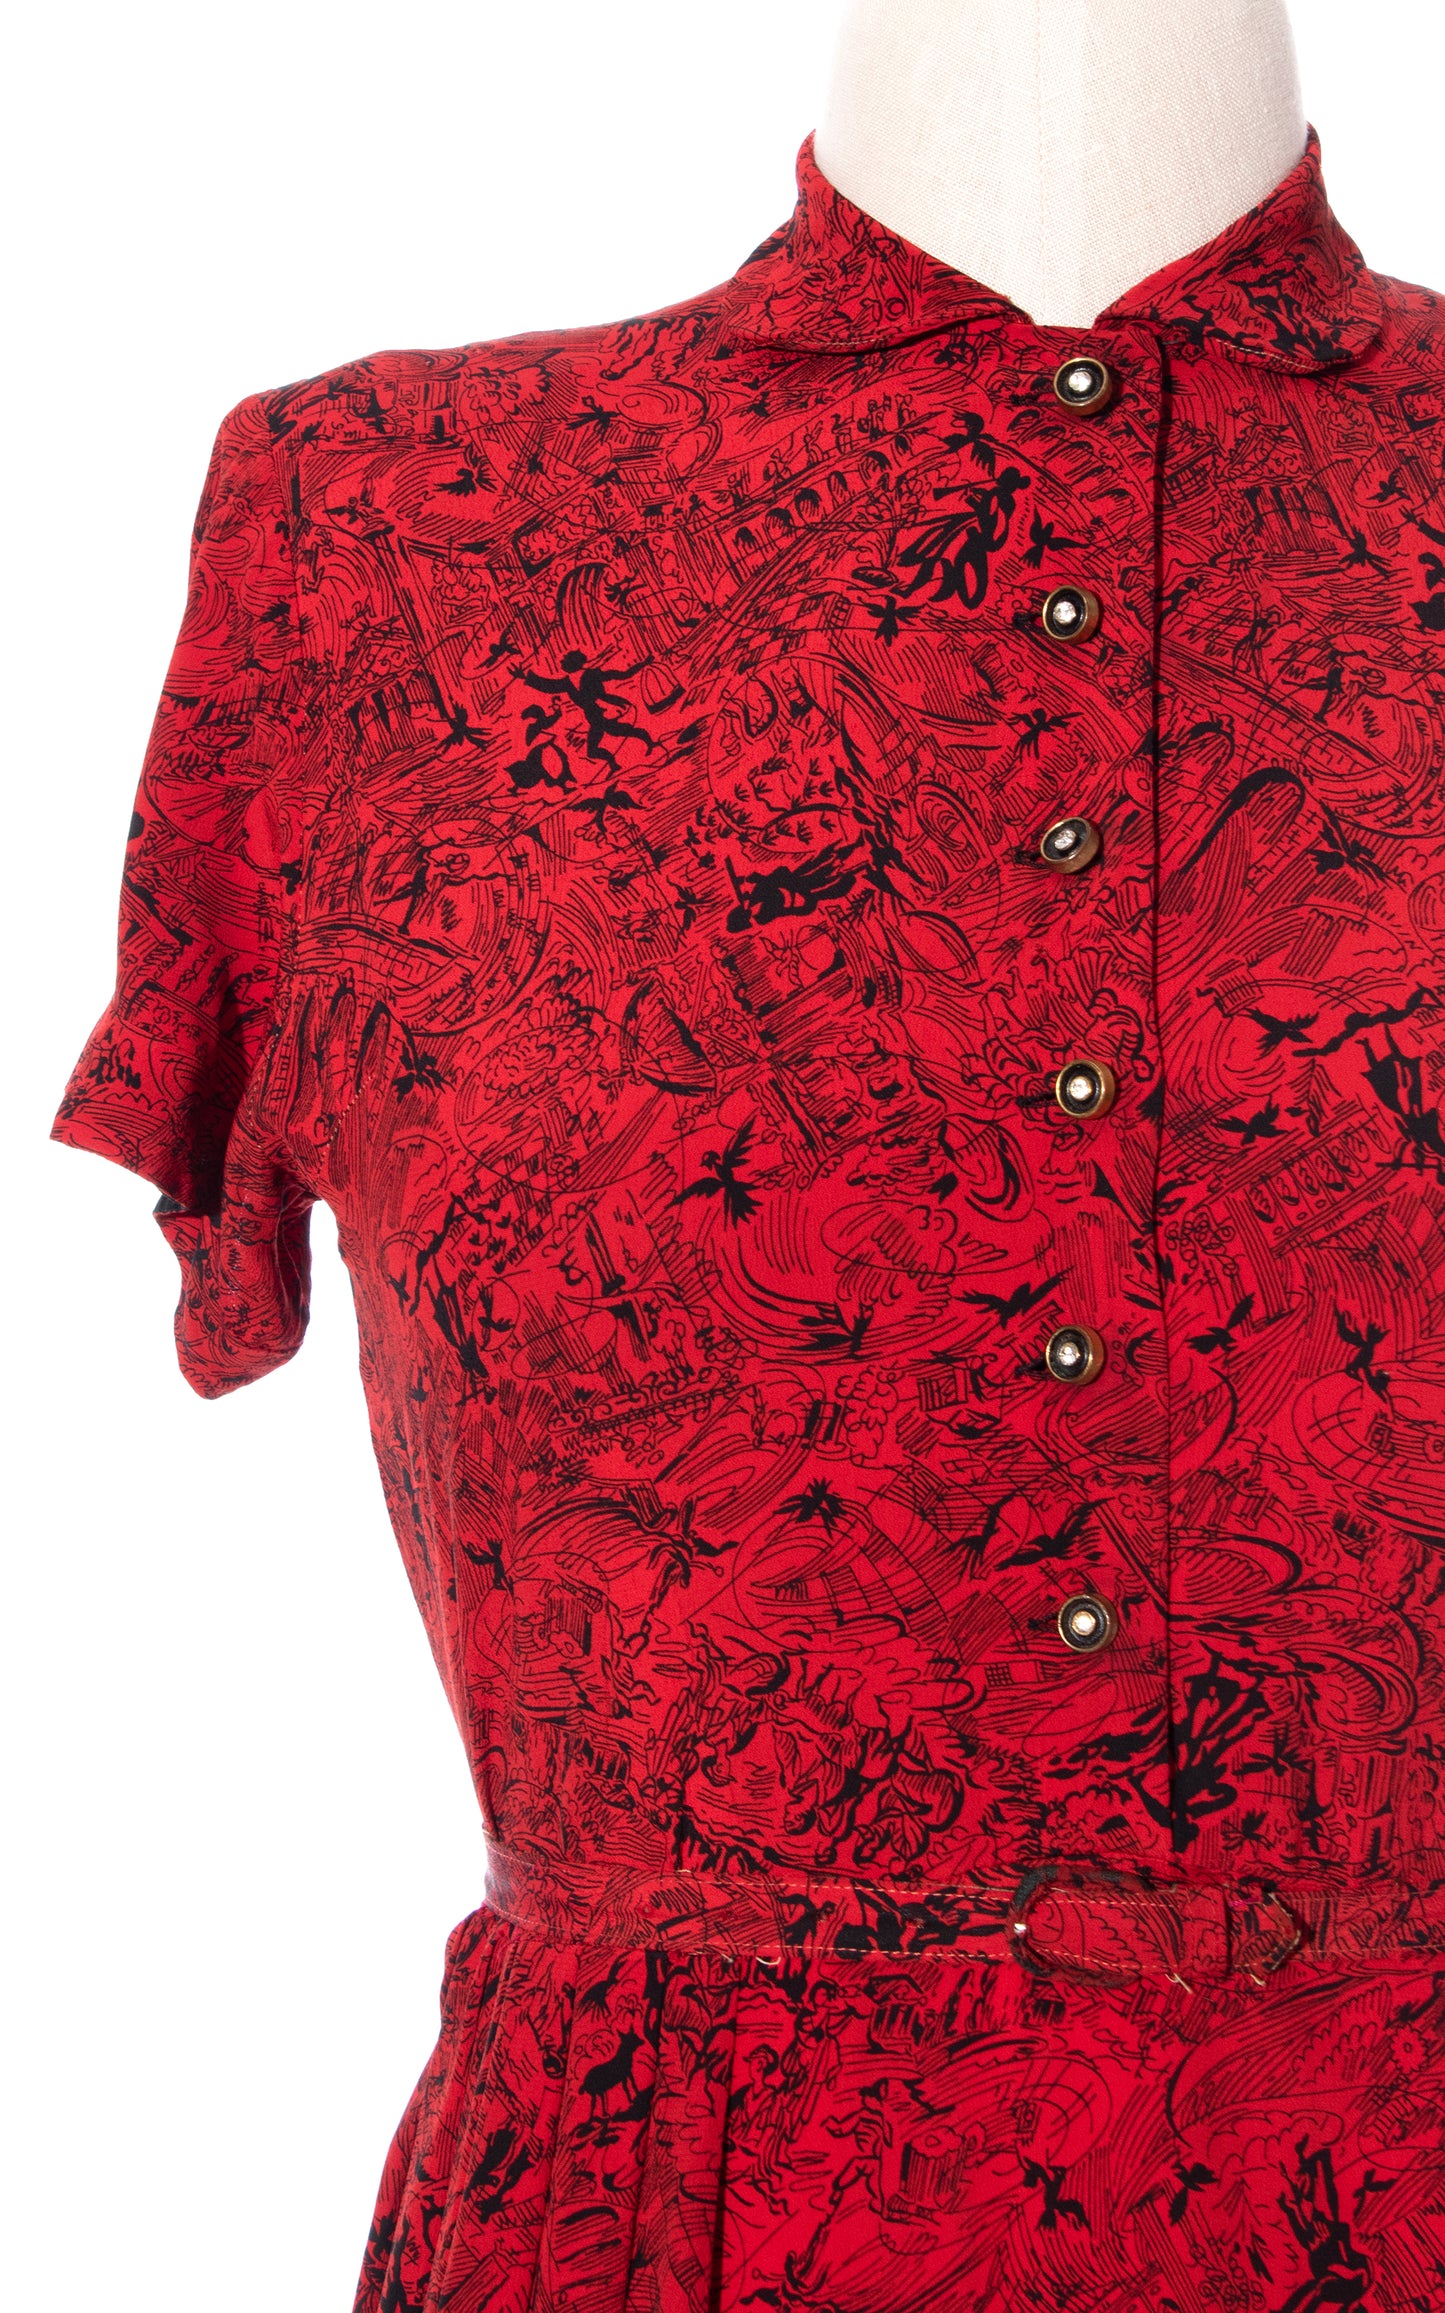 Vintage 40s 1940s People Novelty Print Red Rayon Shirtwaist Dress BirthdayLifeVintage